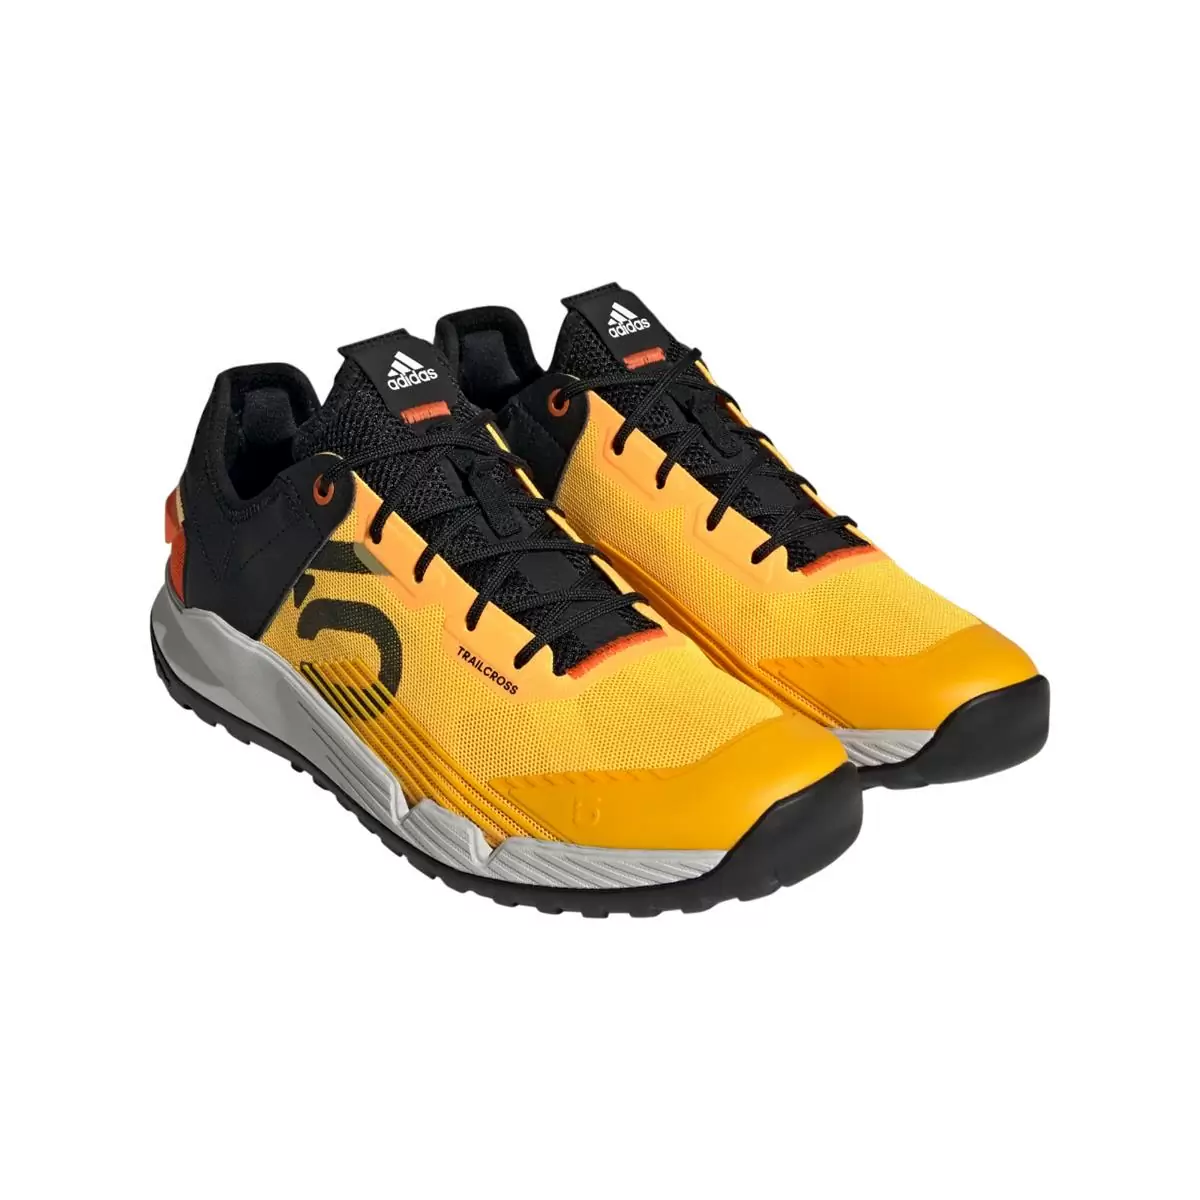 MTB Flat Shoes 5.10 Trailcross LT Black/Orange Size 42.5 #4